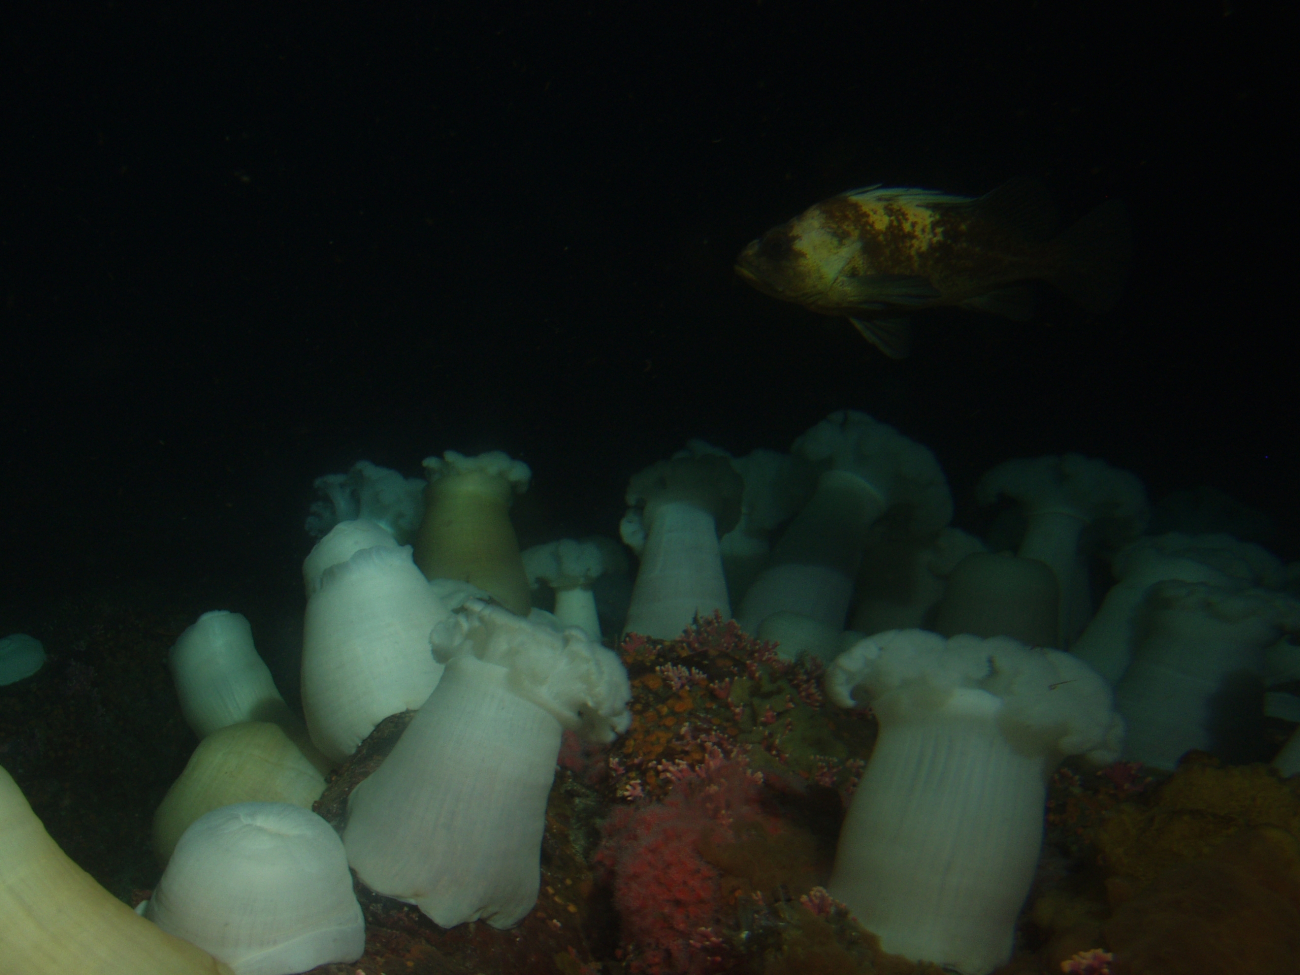 Quillback rockfish (Sebastes maliger) abovewhite plumed sea anemones (Metridium giganteum) at 30 meters depth